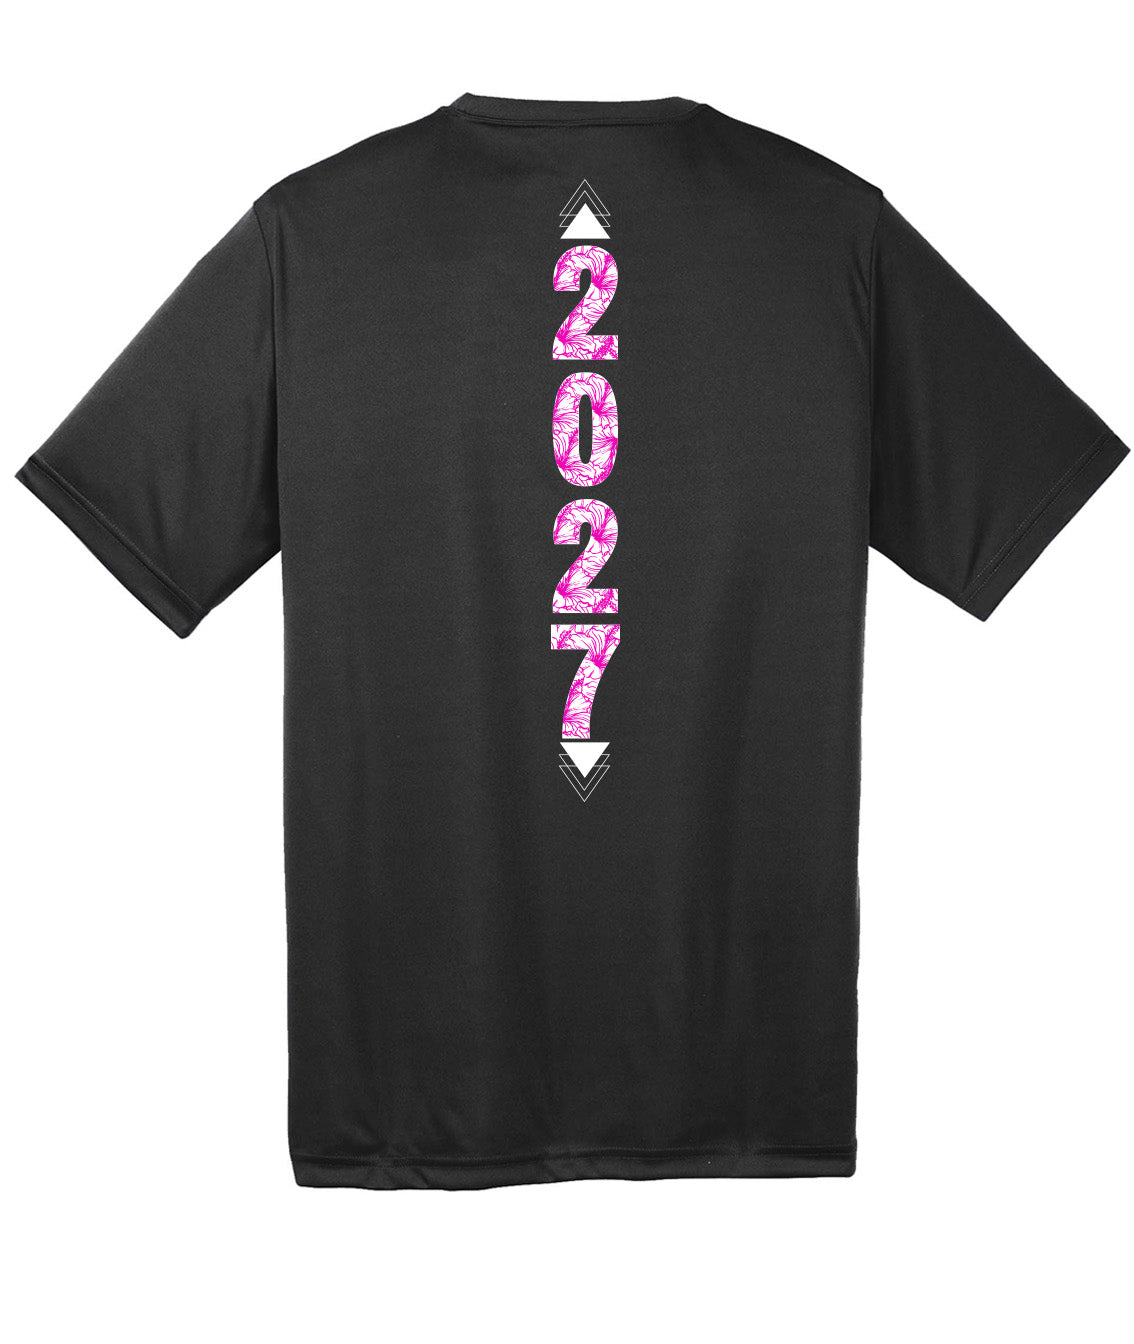 Class of 2027 Dri-Fit Shirt